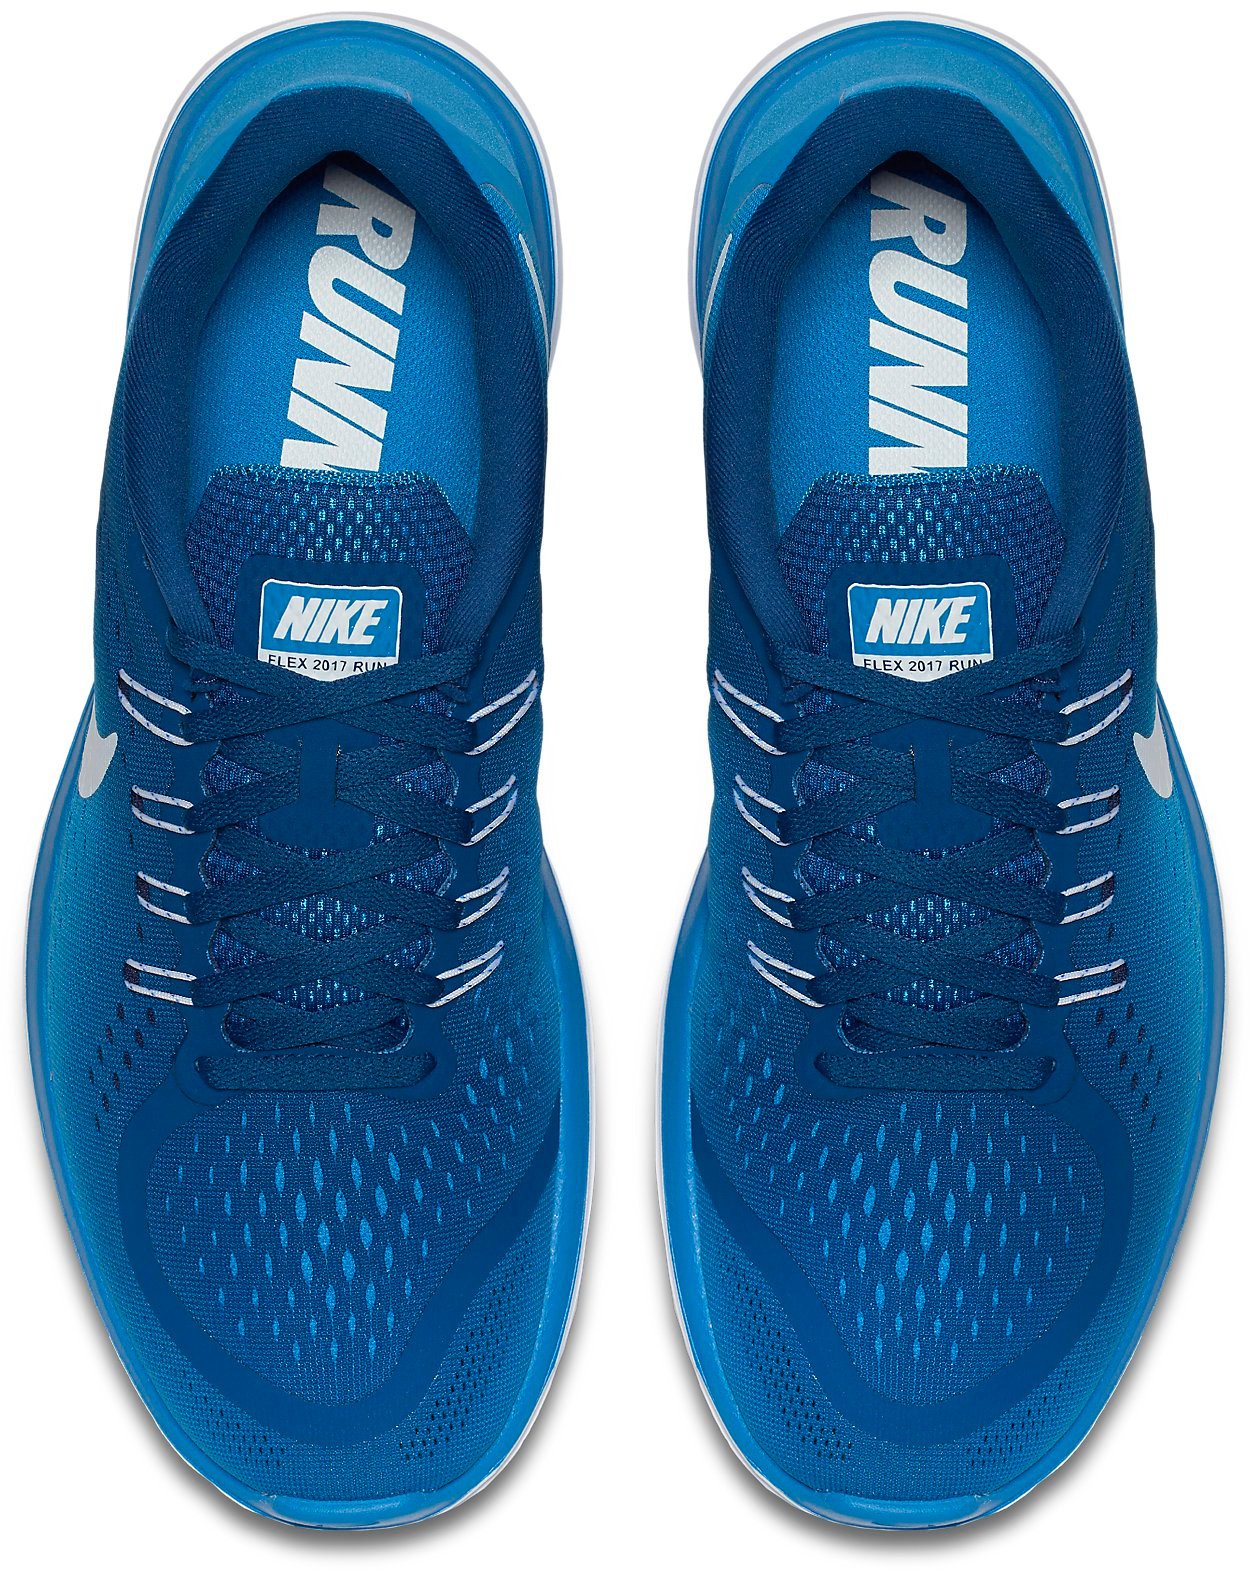 Running shoes Nike 2017 RN